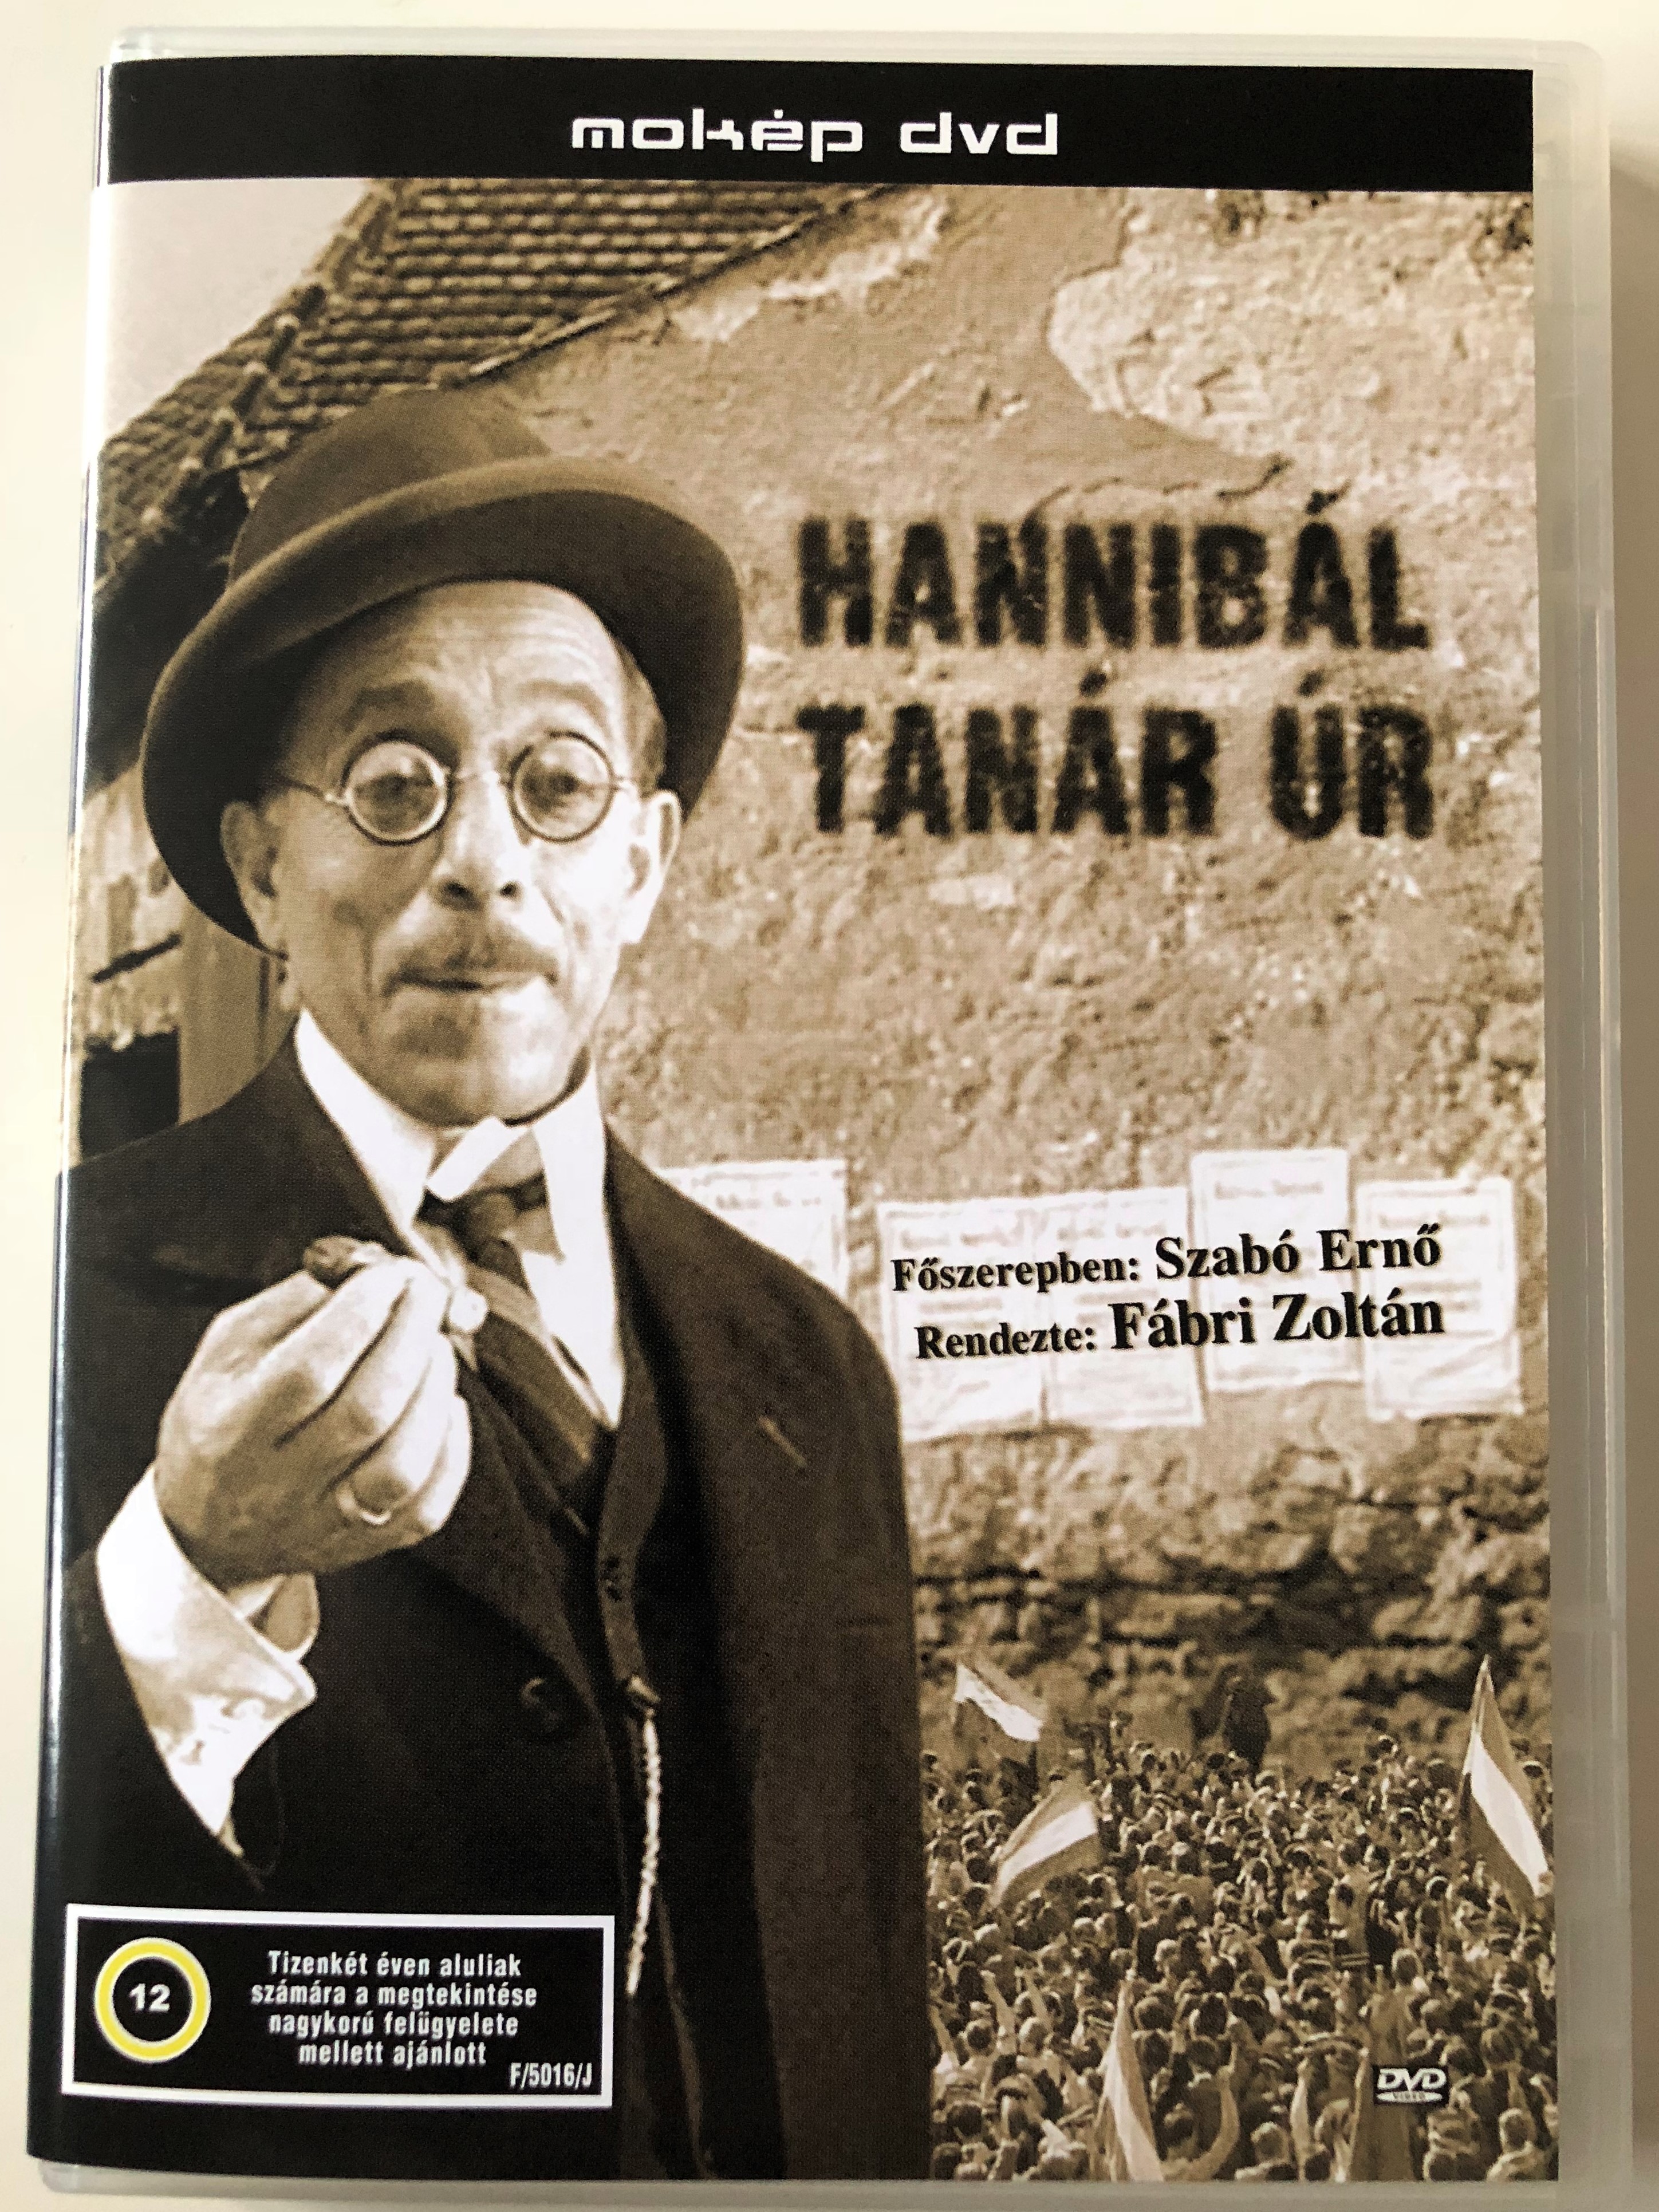 hannib-l-tan-r-r-dvd-1956-professor-hannibal-directed-by-f-bri-zolt-n-starring-szab-ern-kiss-manyi-bessenyei-ferenc-apor-no-mi-m-kl-ry-zolt-n-greguss-zolt-n-1-.jpg